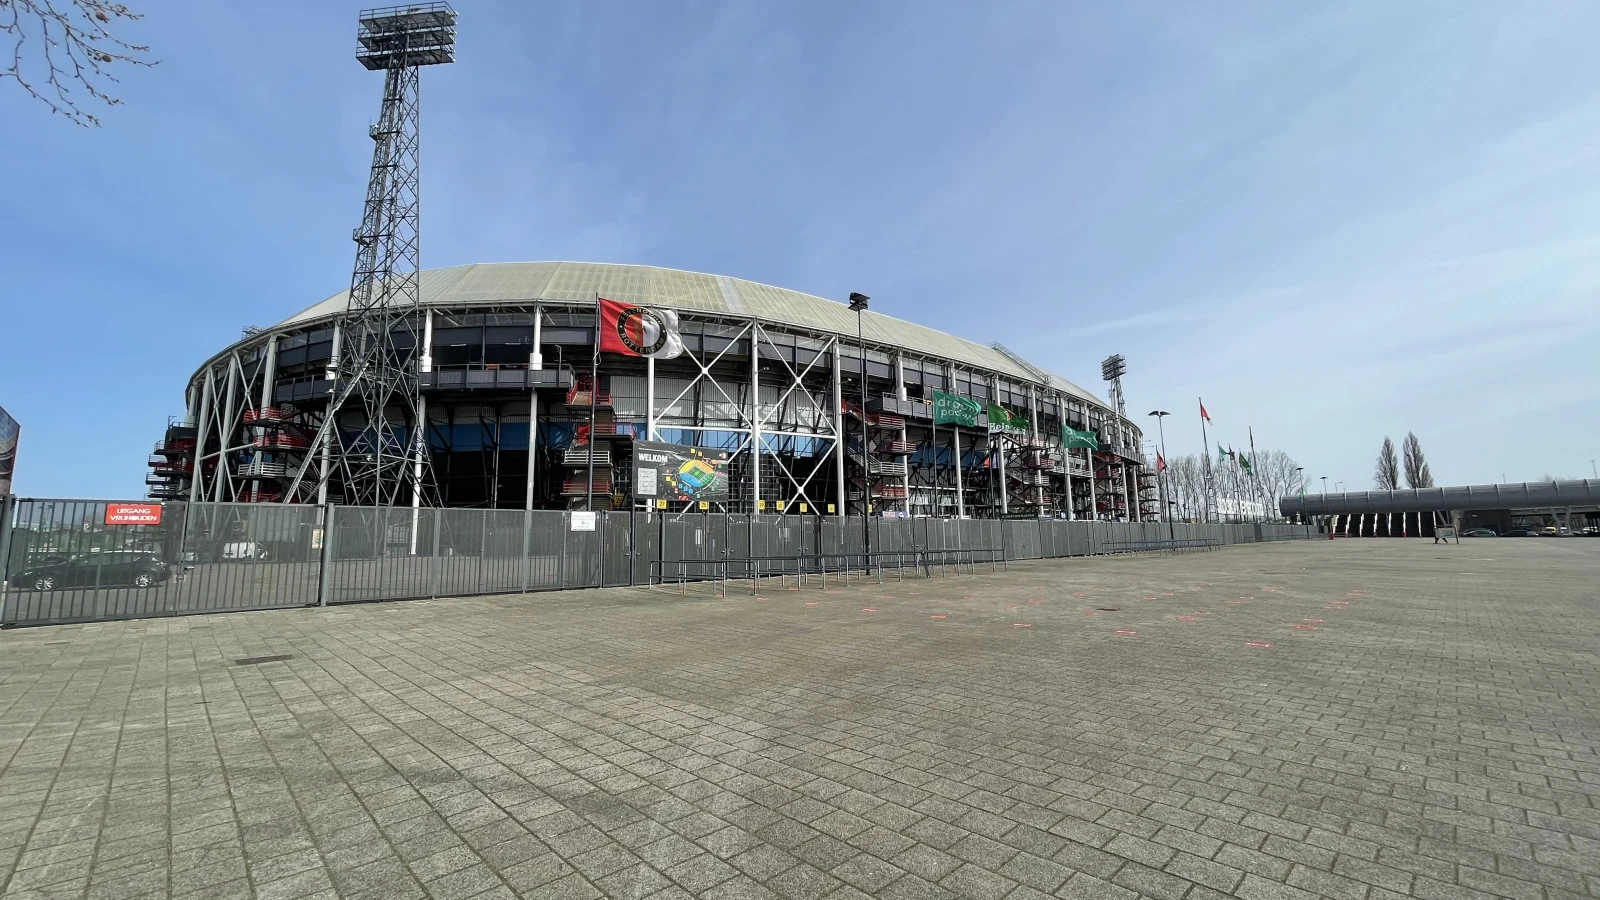 Tijdstip aangepast van bekerwedstrijd tussen FC Twente en Feyenoord